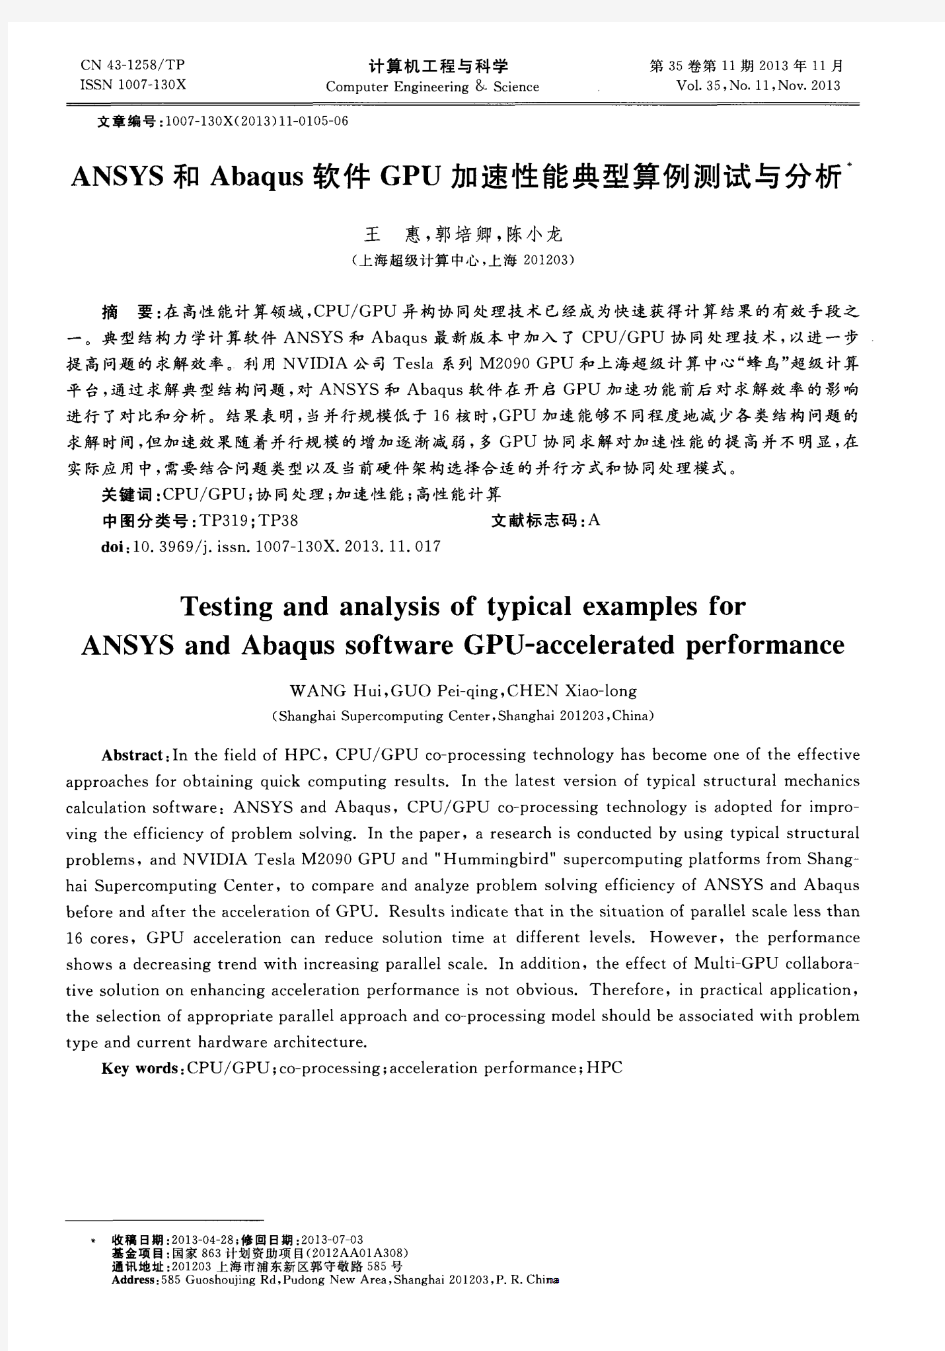 ANSYS和Abaqus软件GPU加速性能典型算例测试与分析